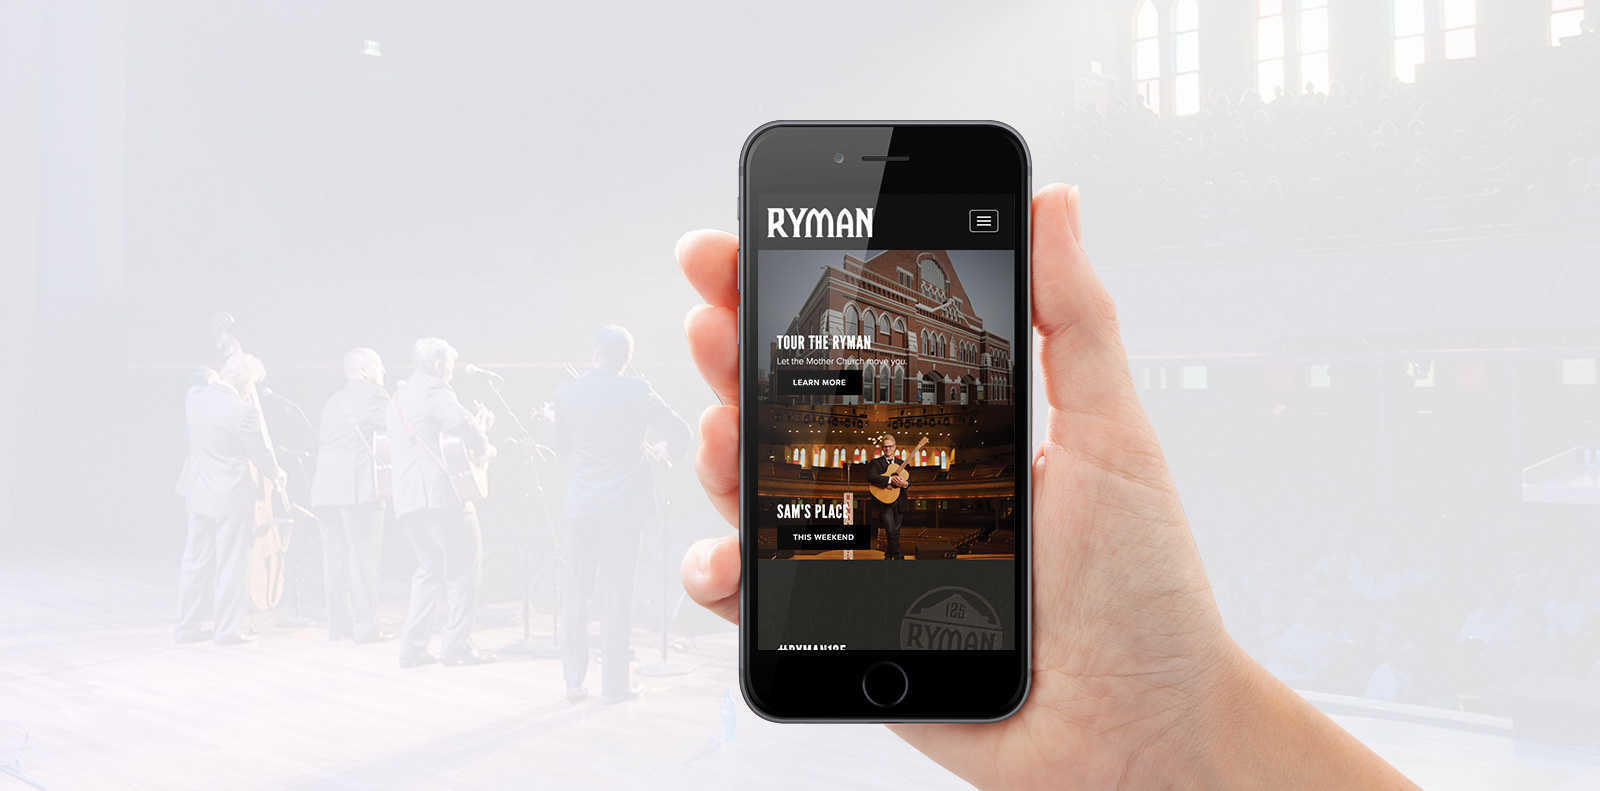 Website Design and Development for Nashville's Best Music Venue The Ryman Auditorium, by DesignUps